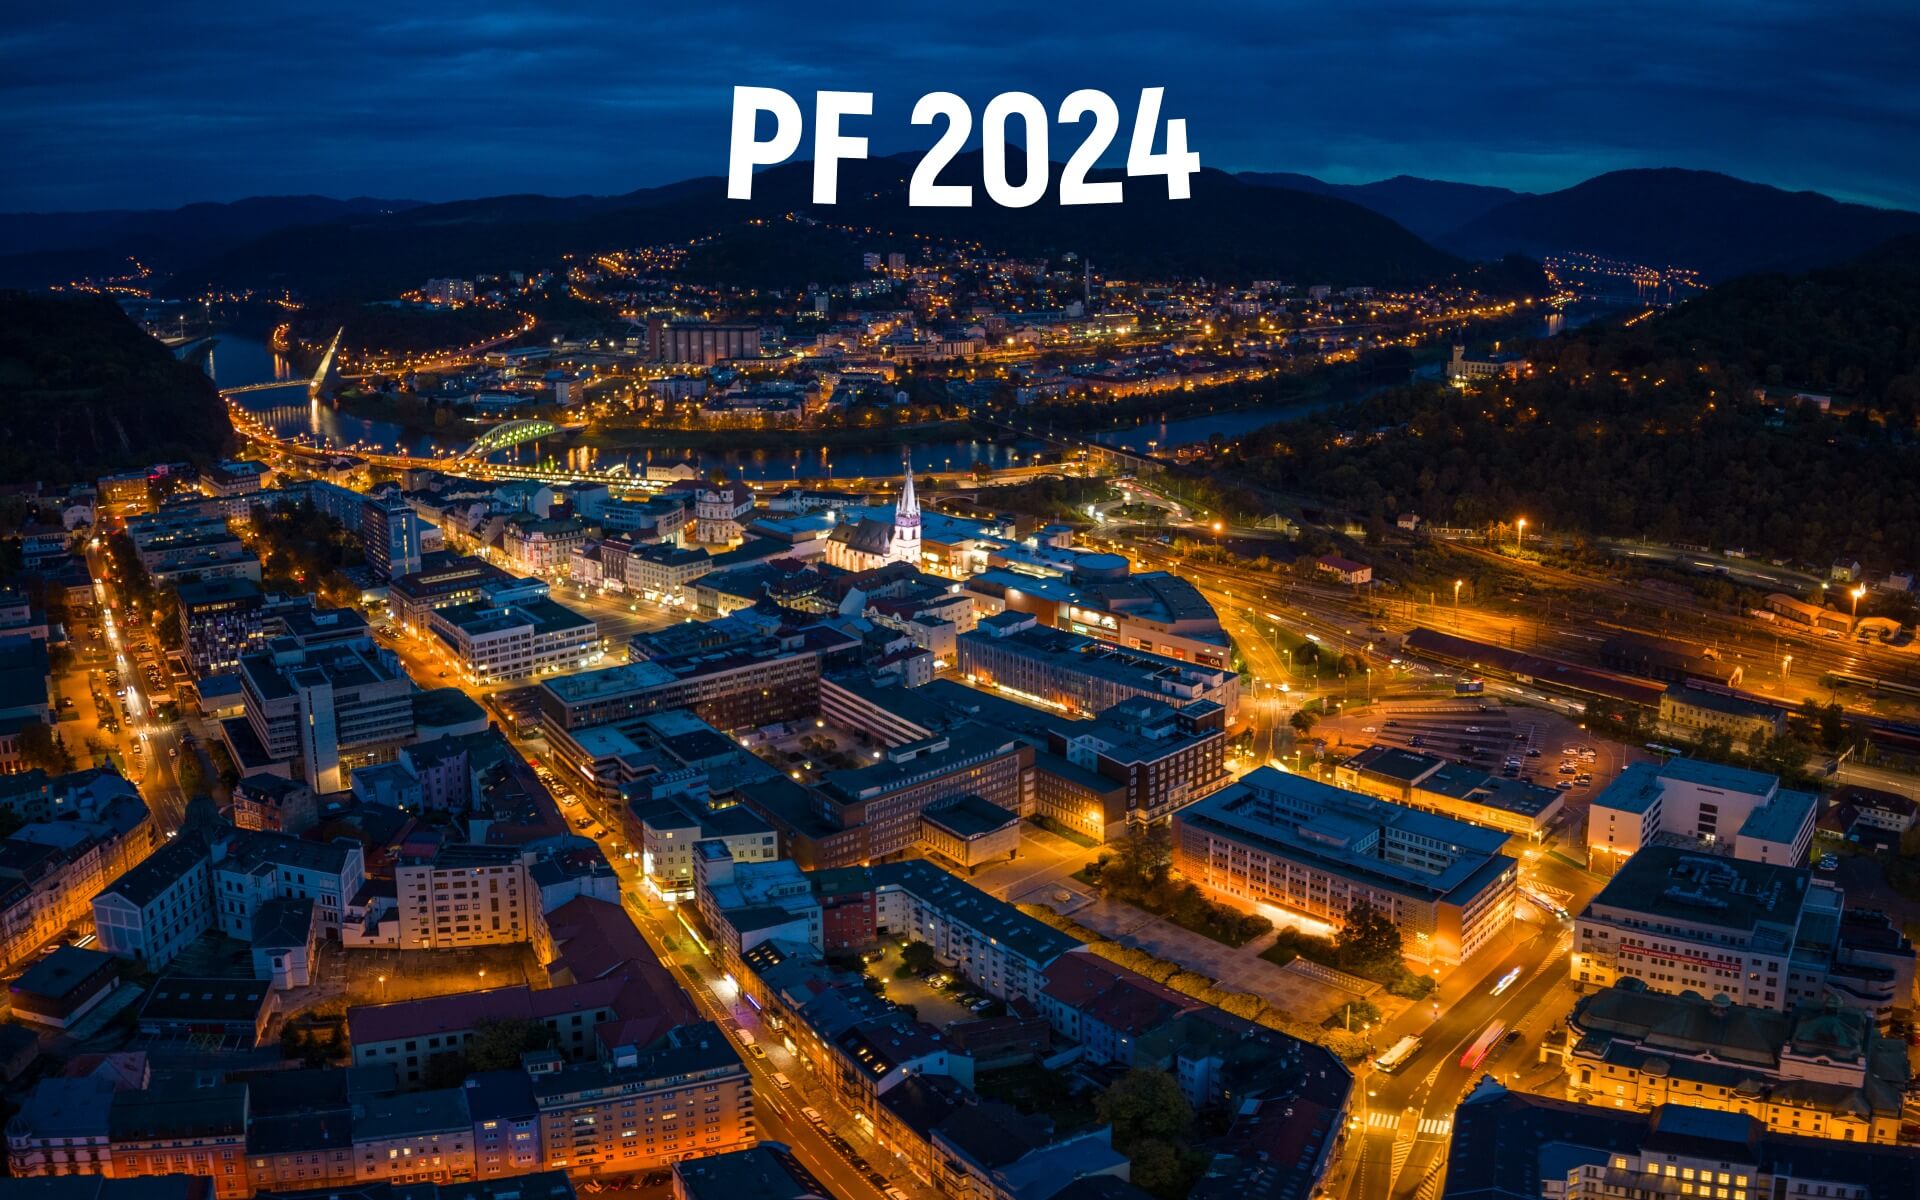 PF 2024 (for Spojenci pro kraj)